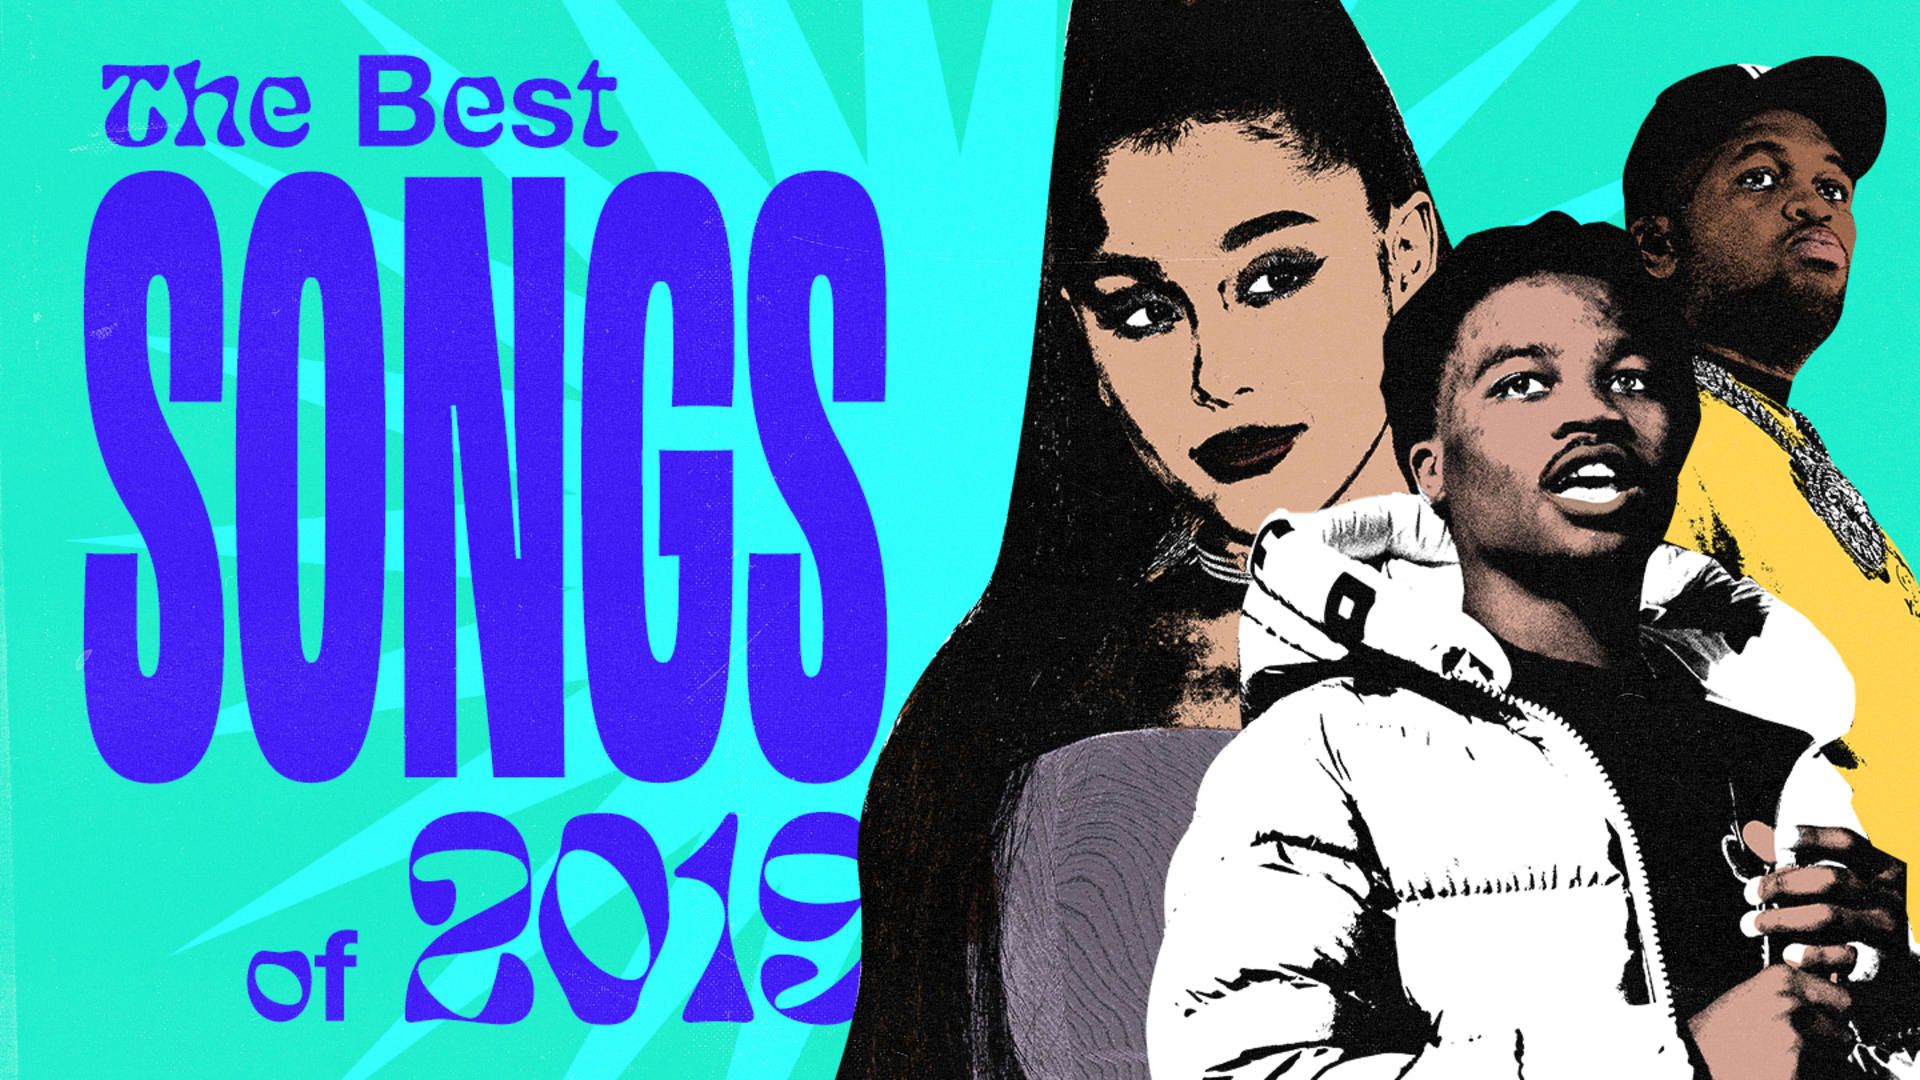 Best Songs of 2019: Top Songs of The Year